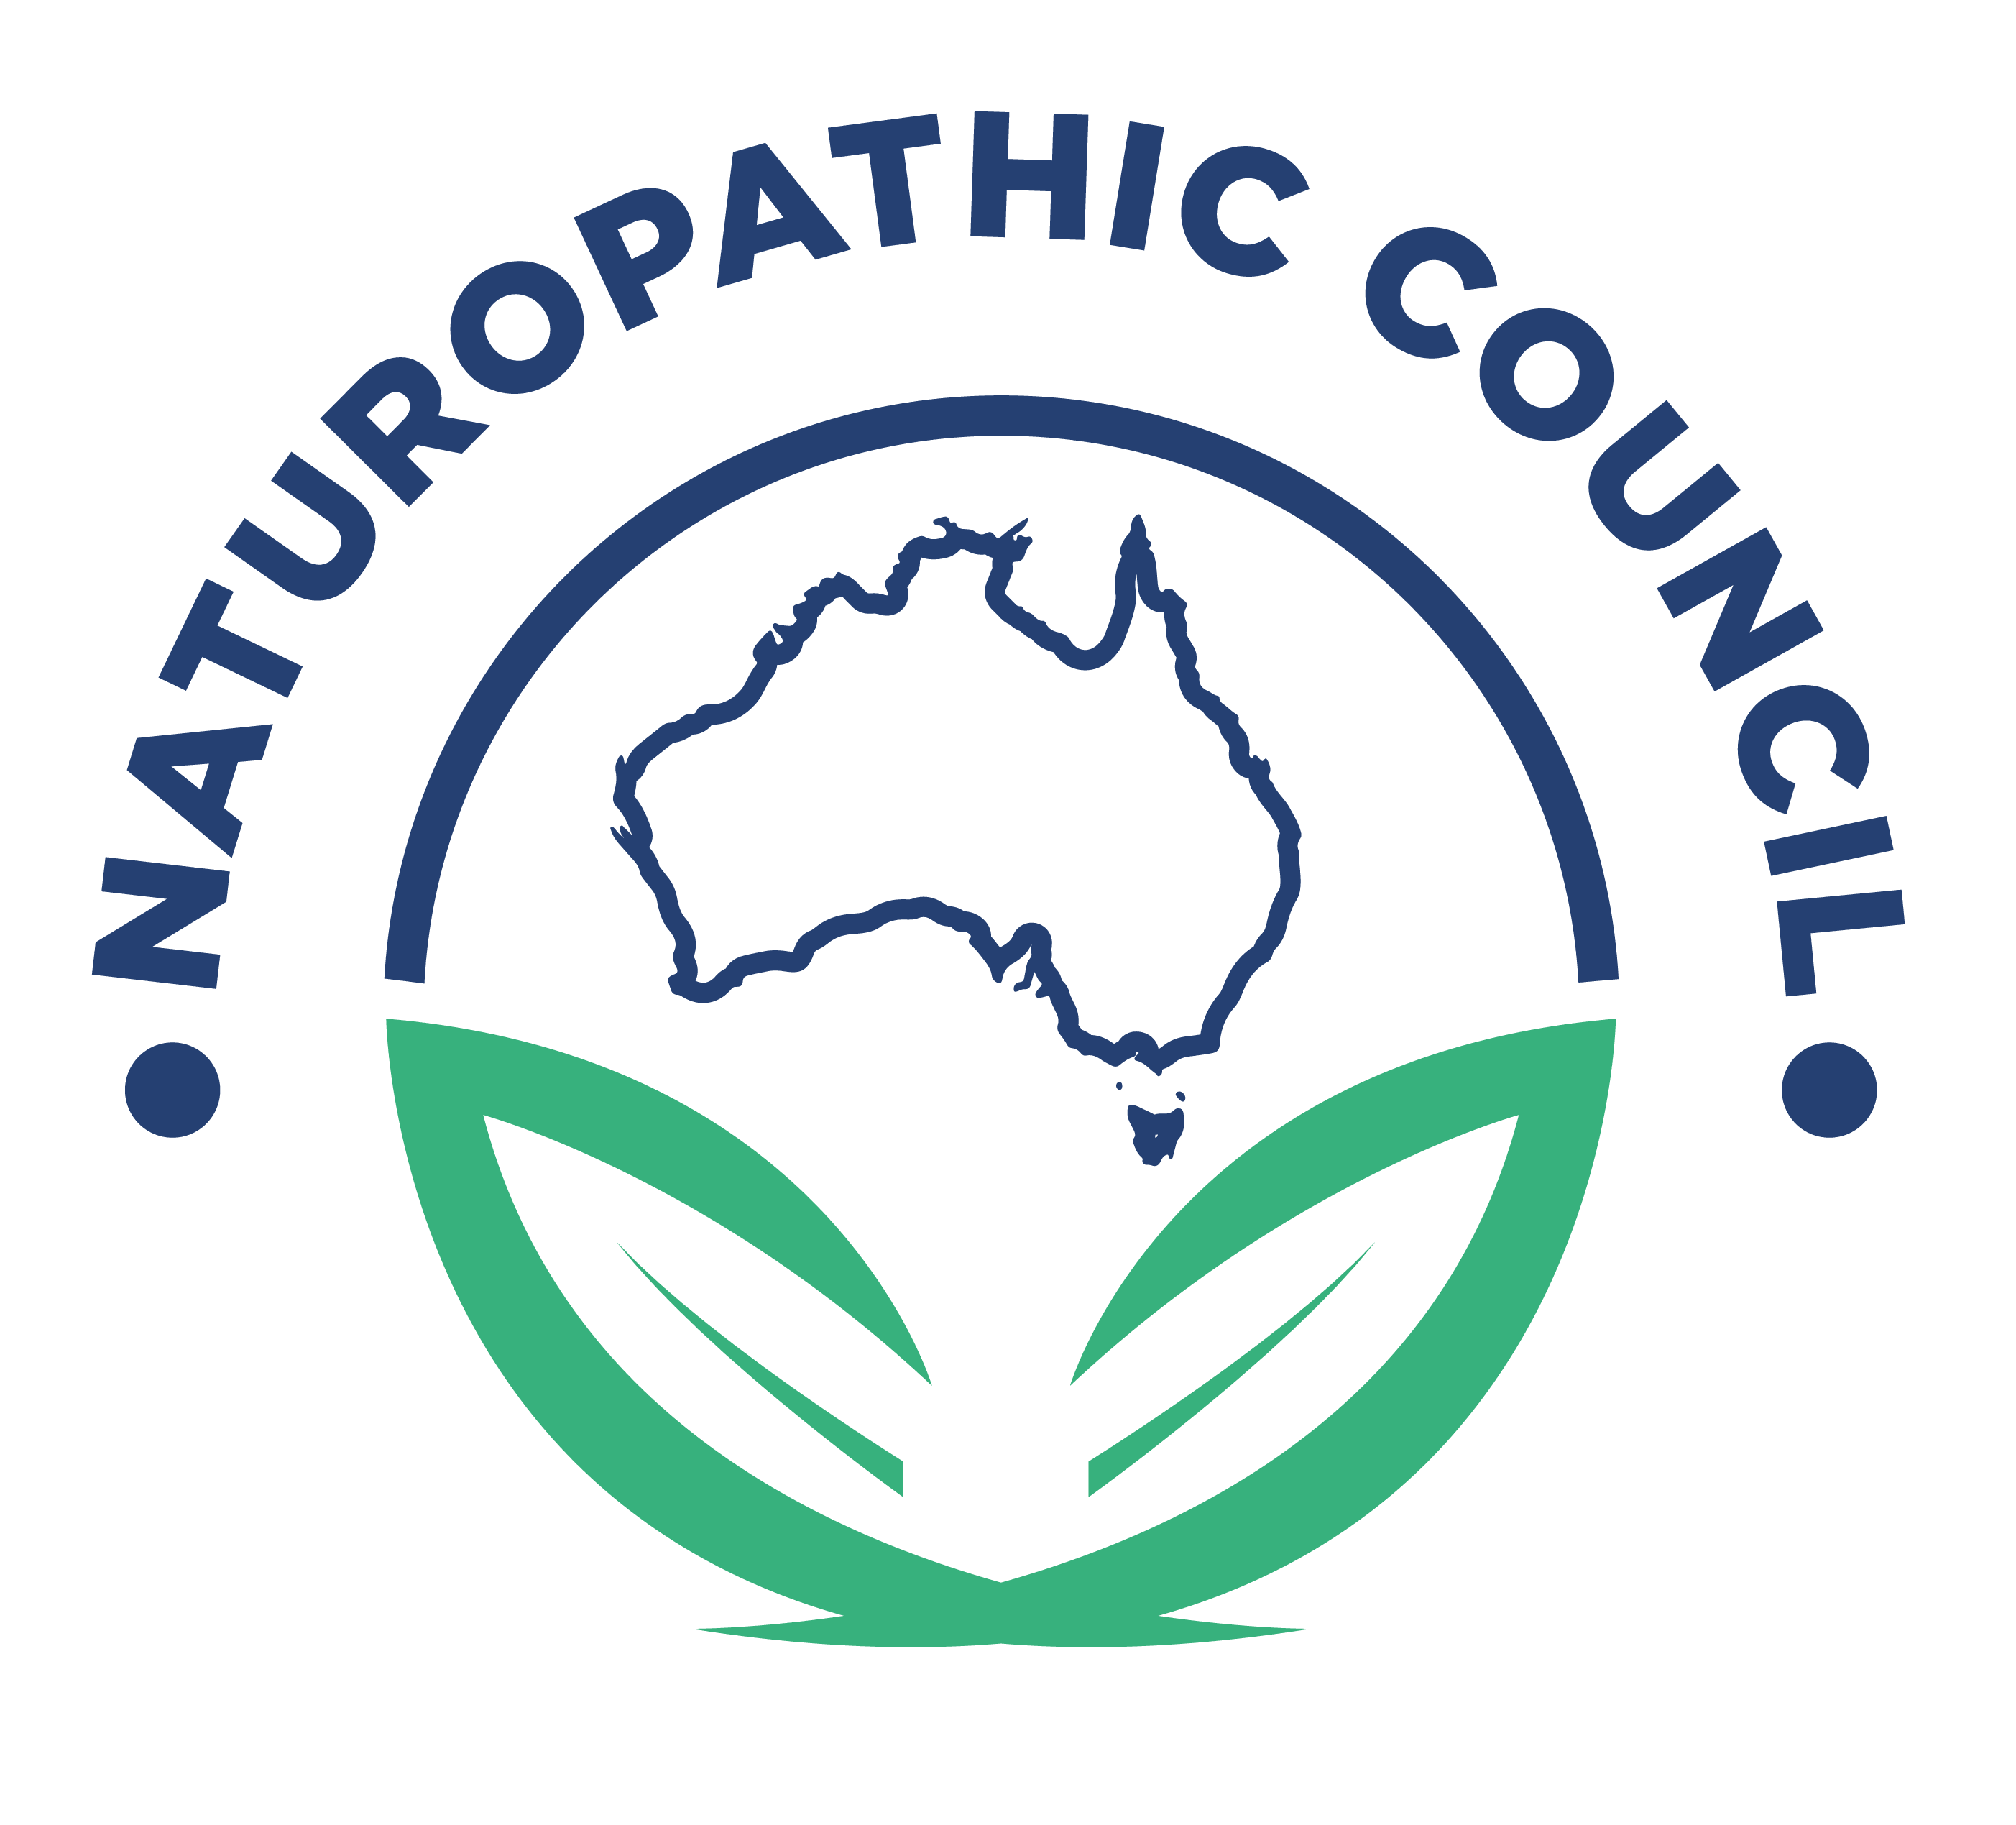 naturopathic council of Australia logo